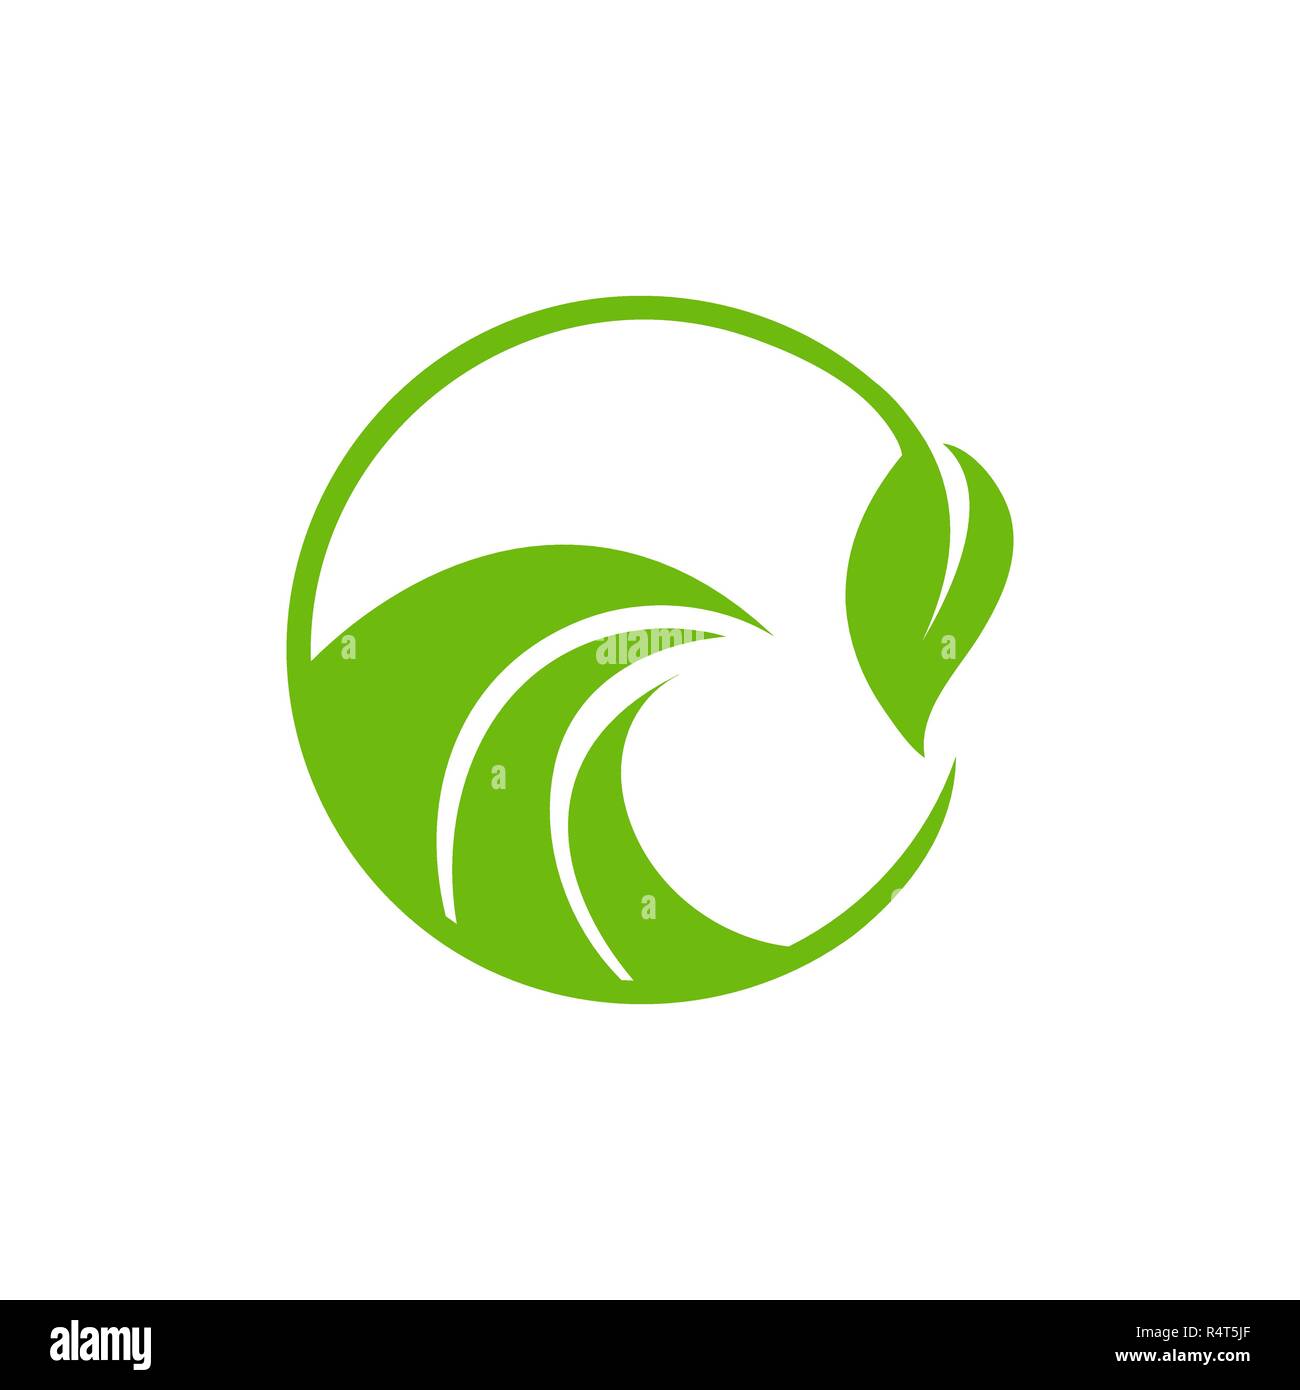 water energy logo